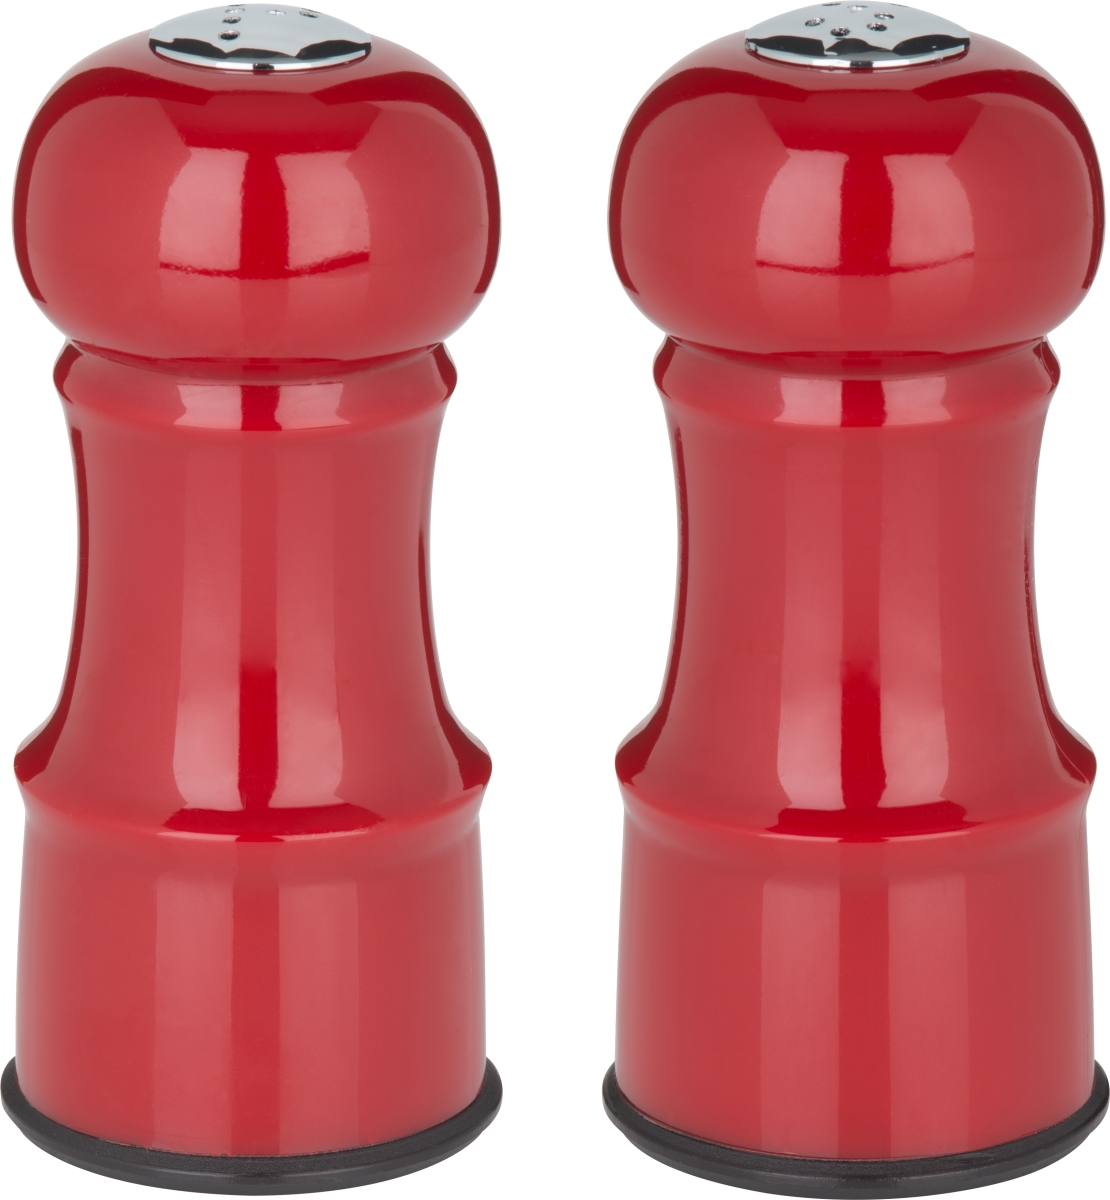 714097 Metal Salt & Pepper Shakers, Red